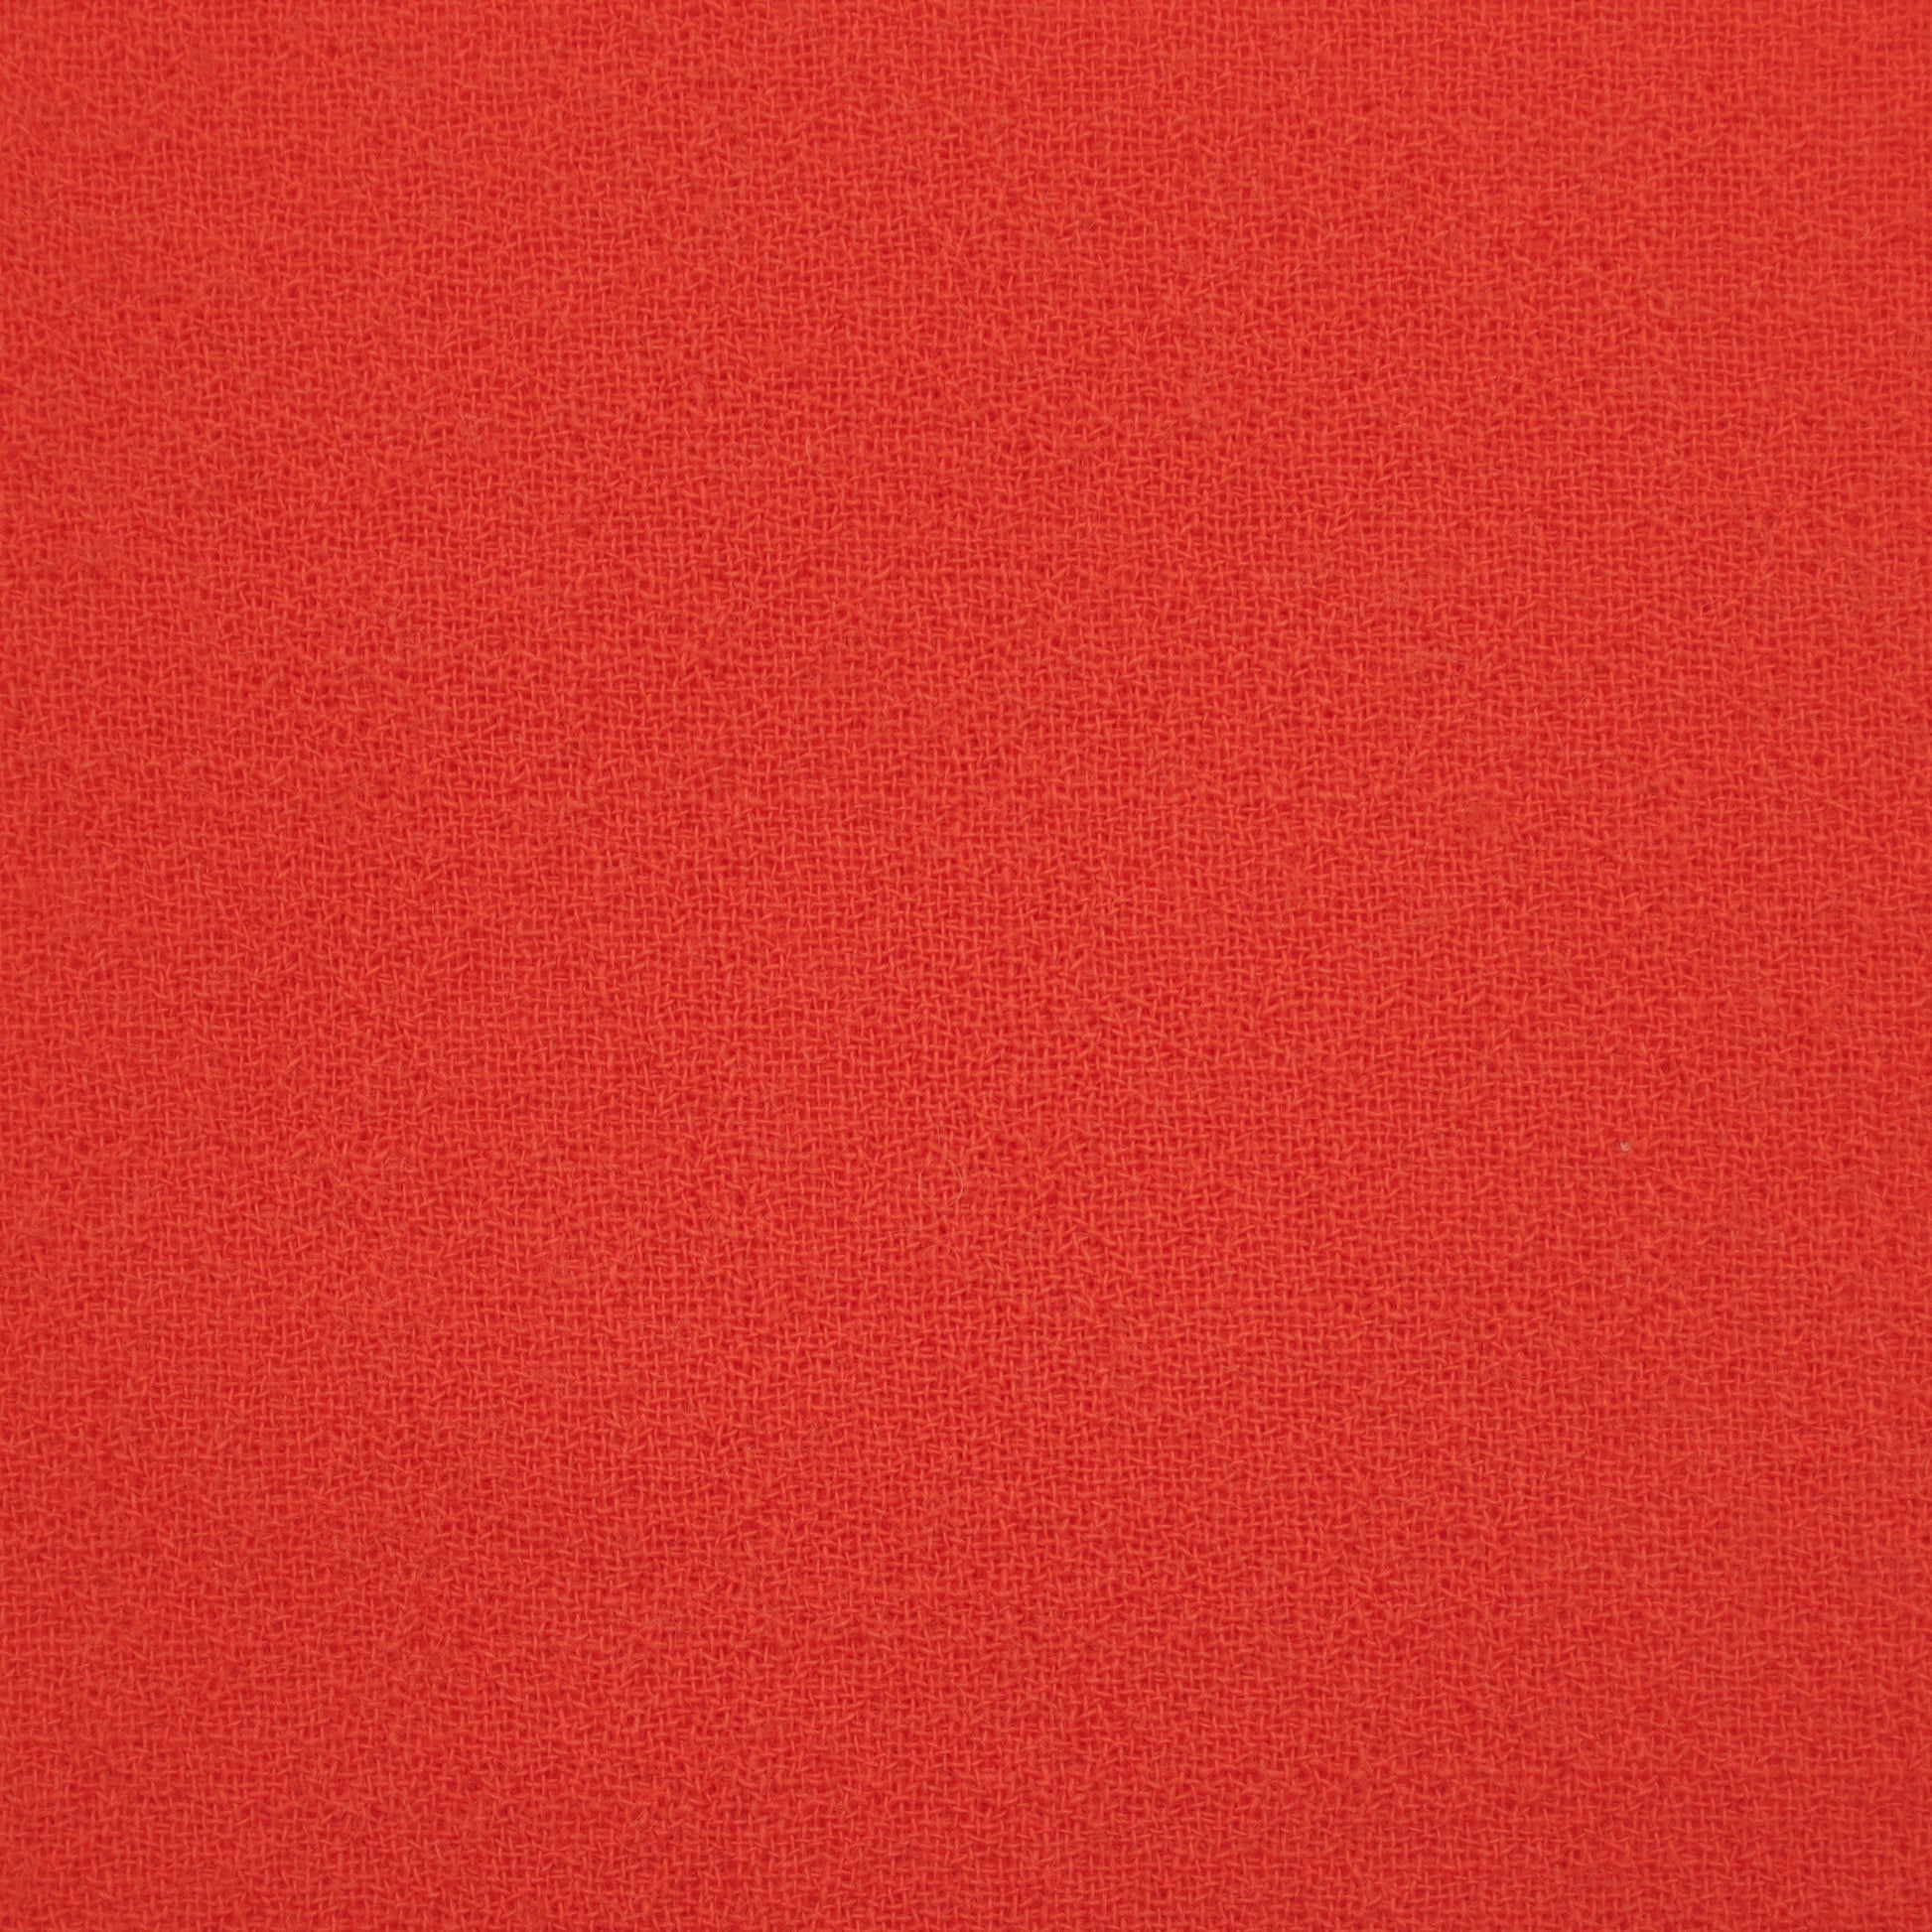 Heavyweight Moss Crepe Wool in Crimson (Red)